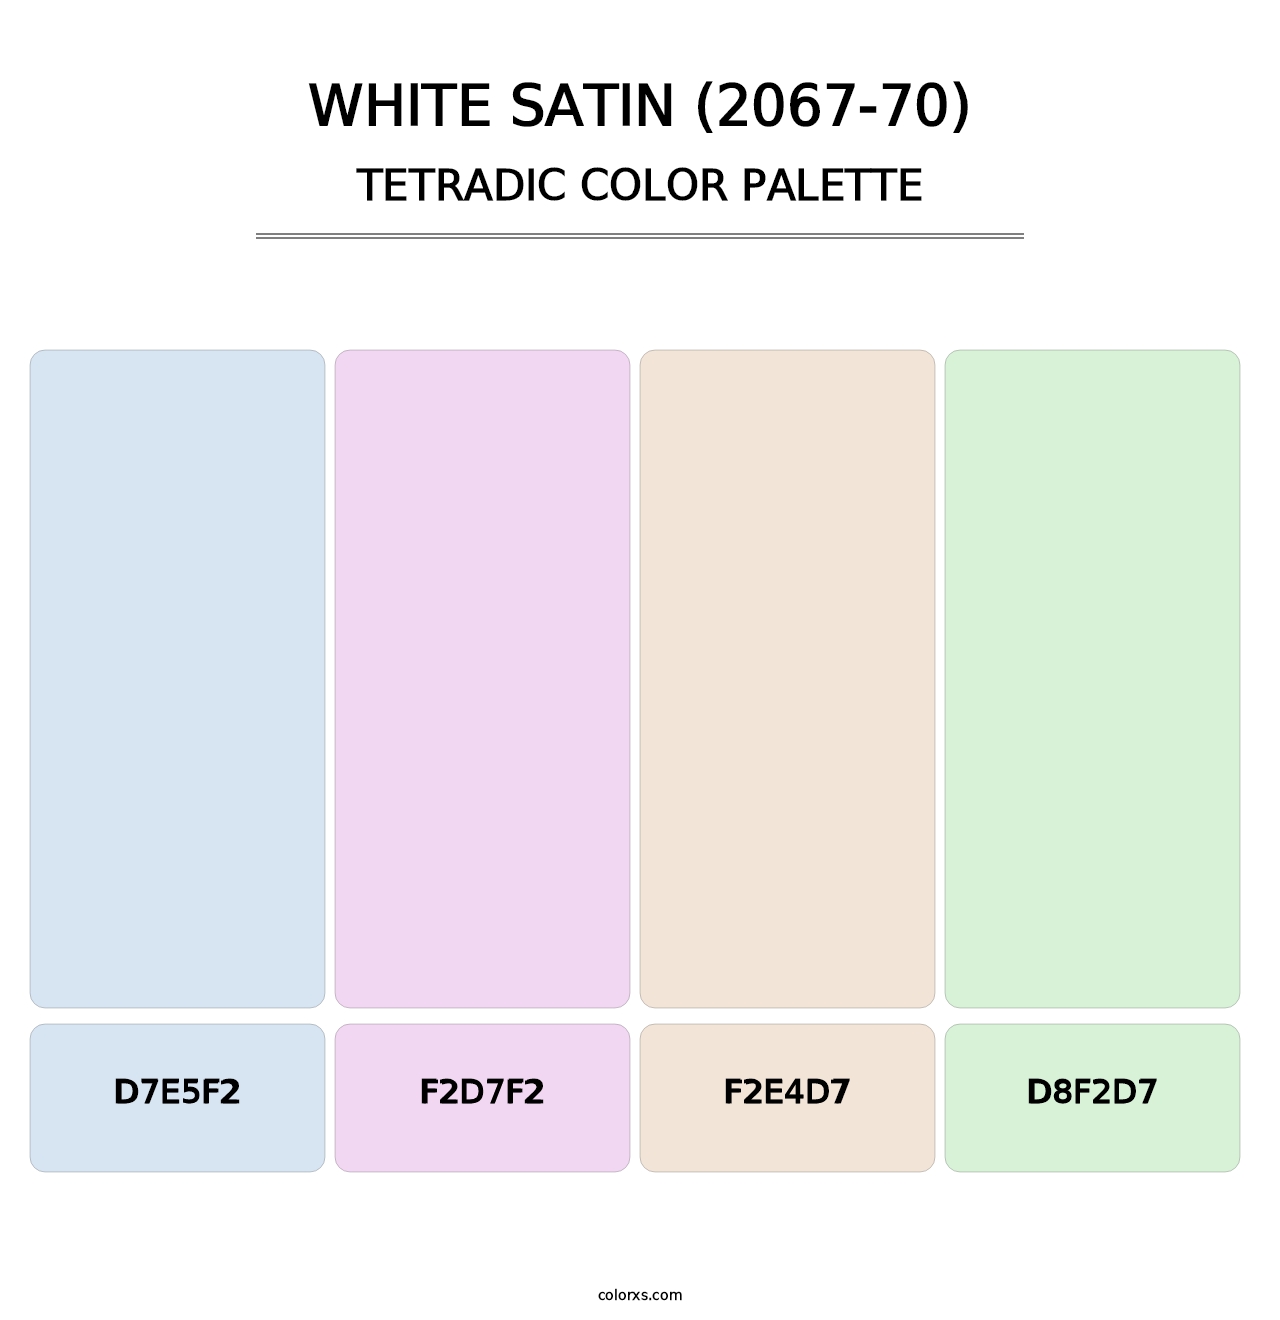 White Satin (2067-70) - Tetradic Color Palette